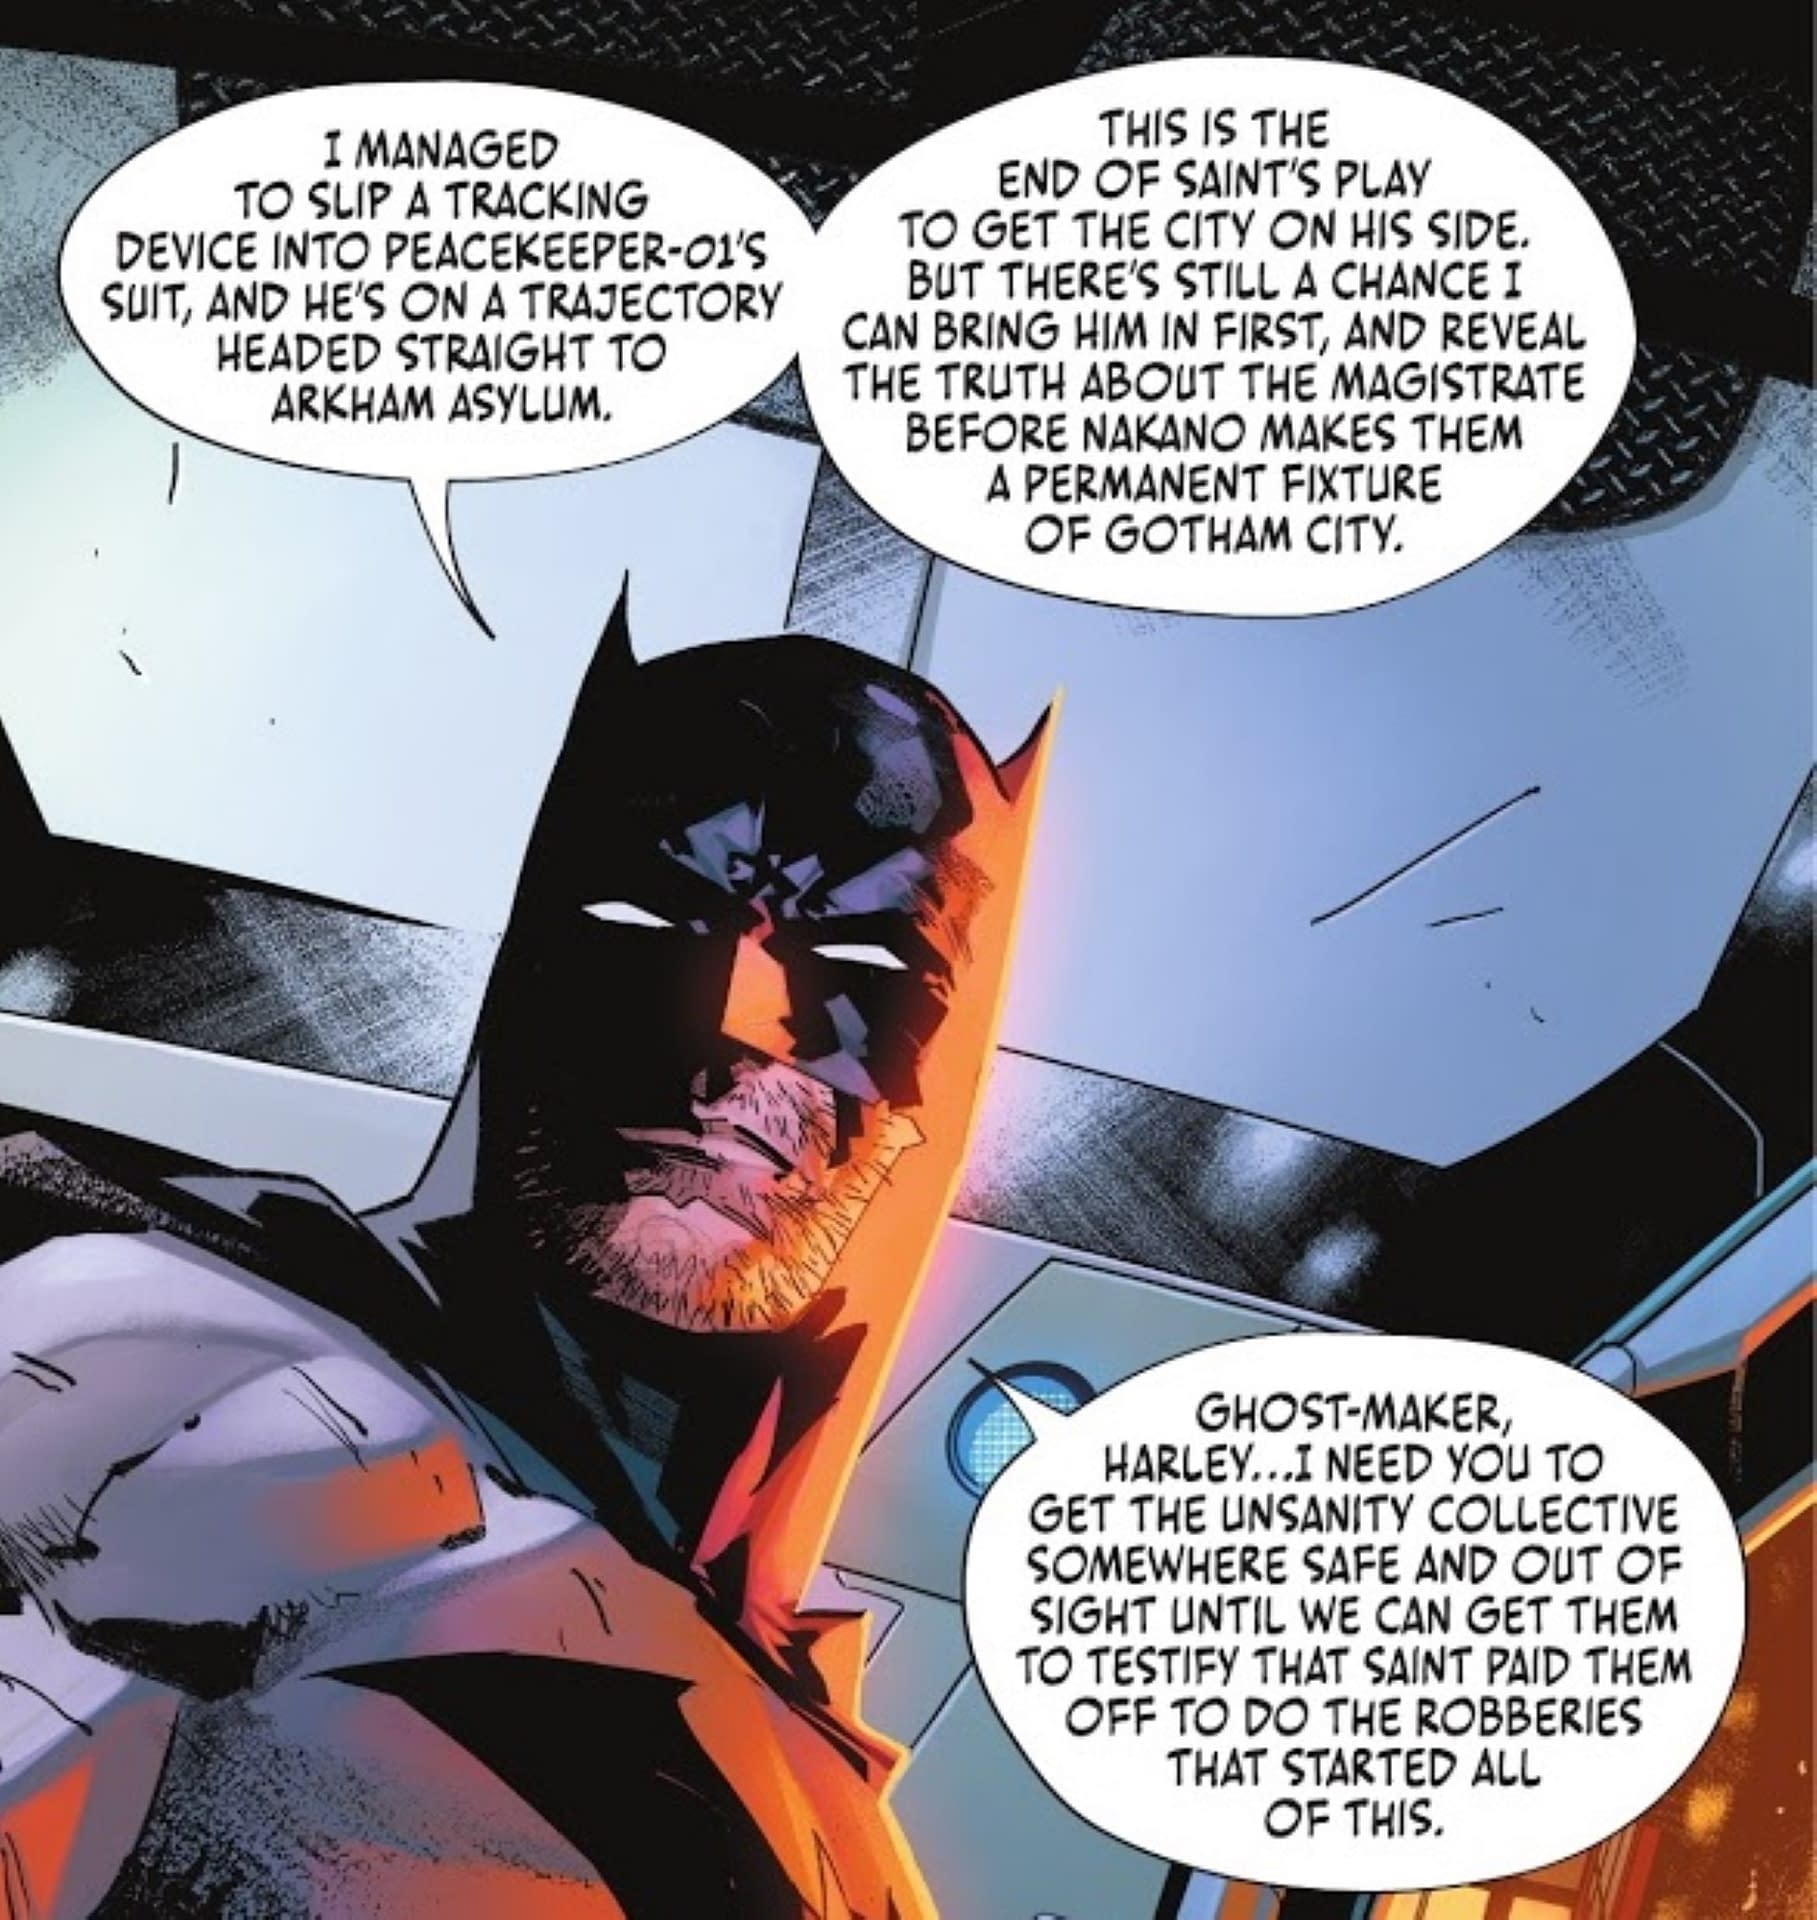 James Tynion IV Quits Batman and DC Comics For Substack Comics Gig